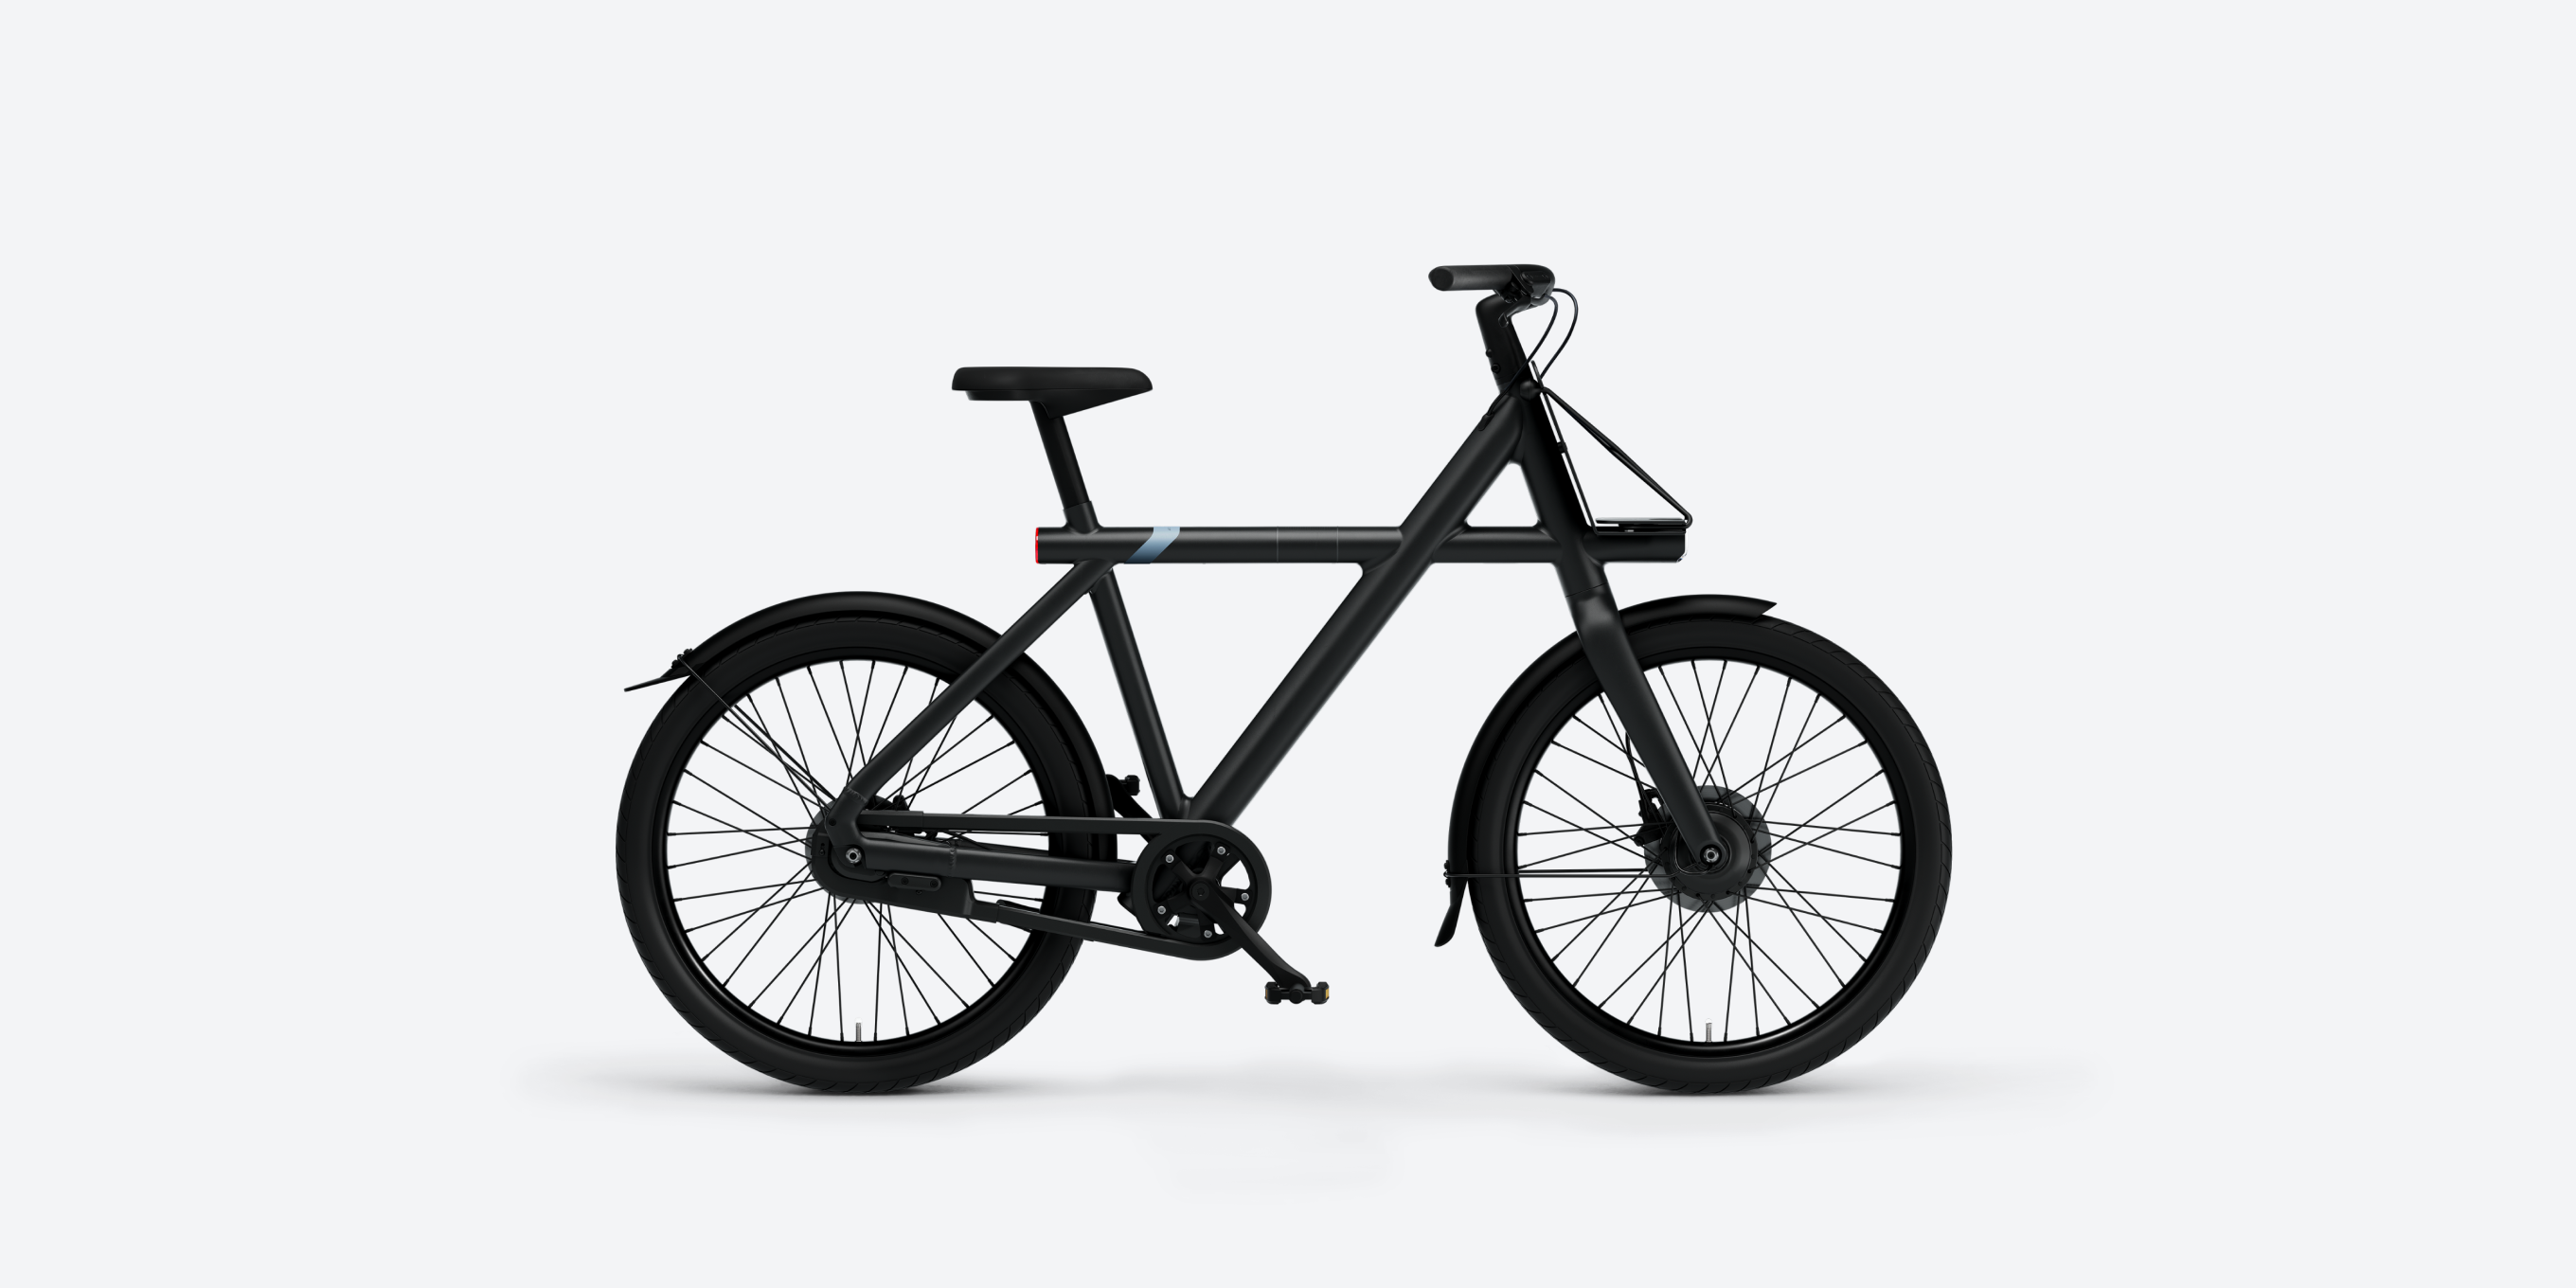 x3-dark-bike-side-view